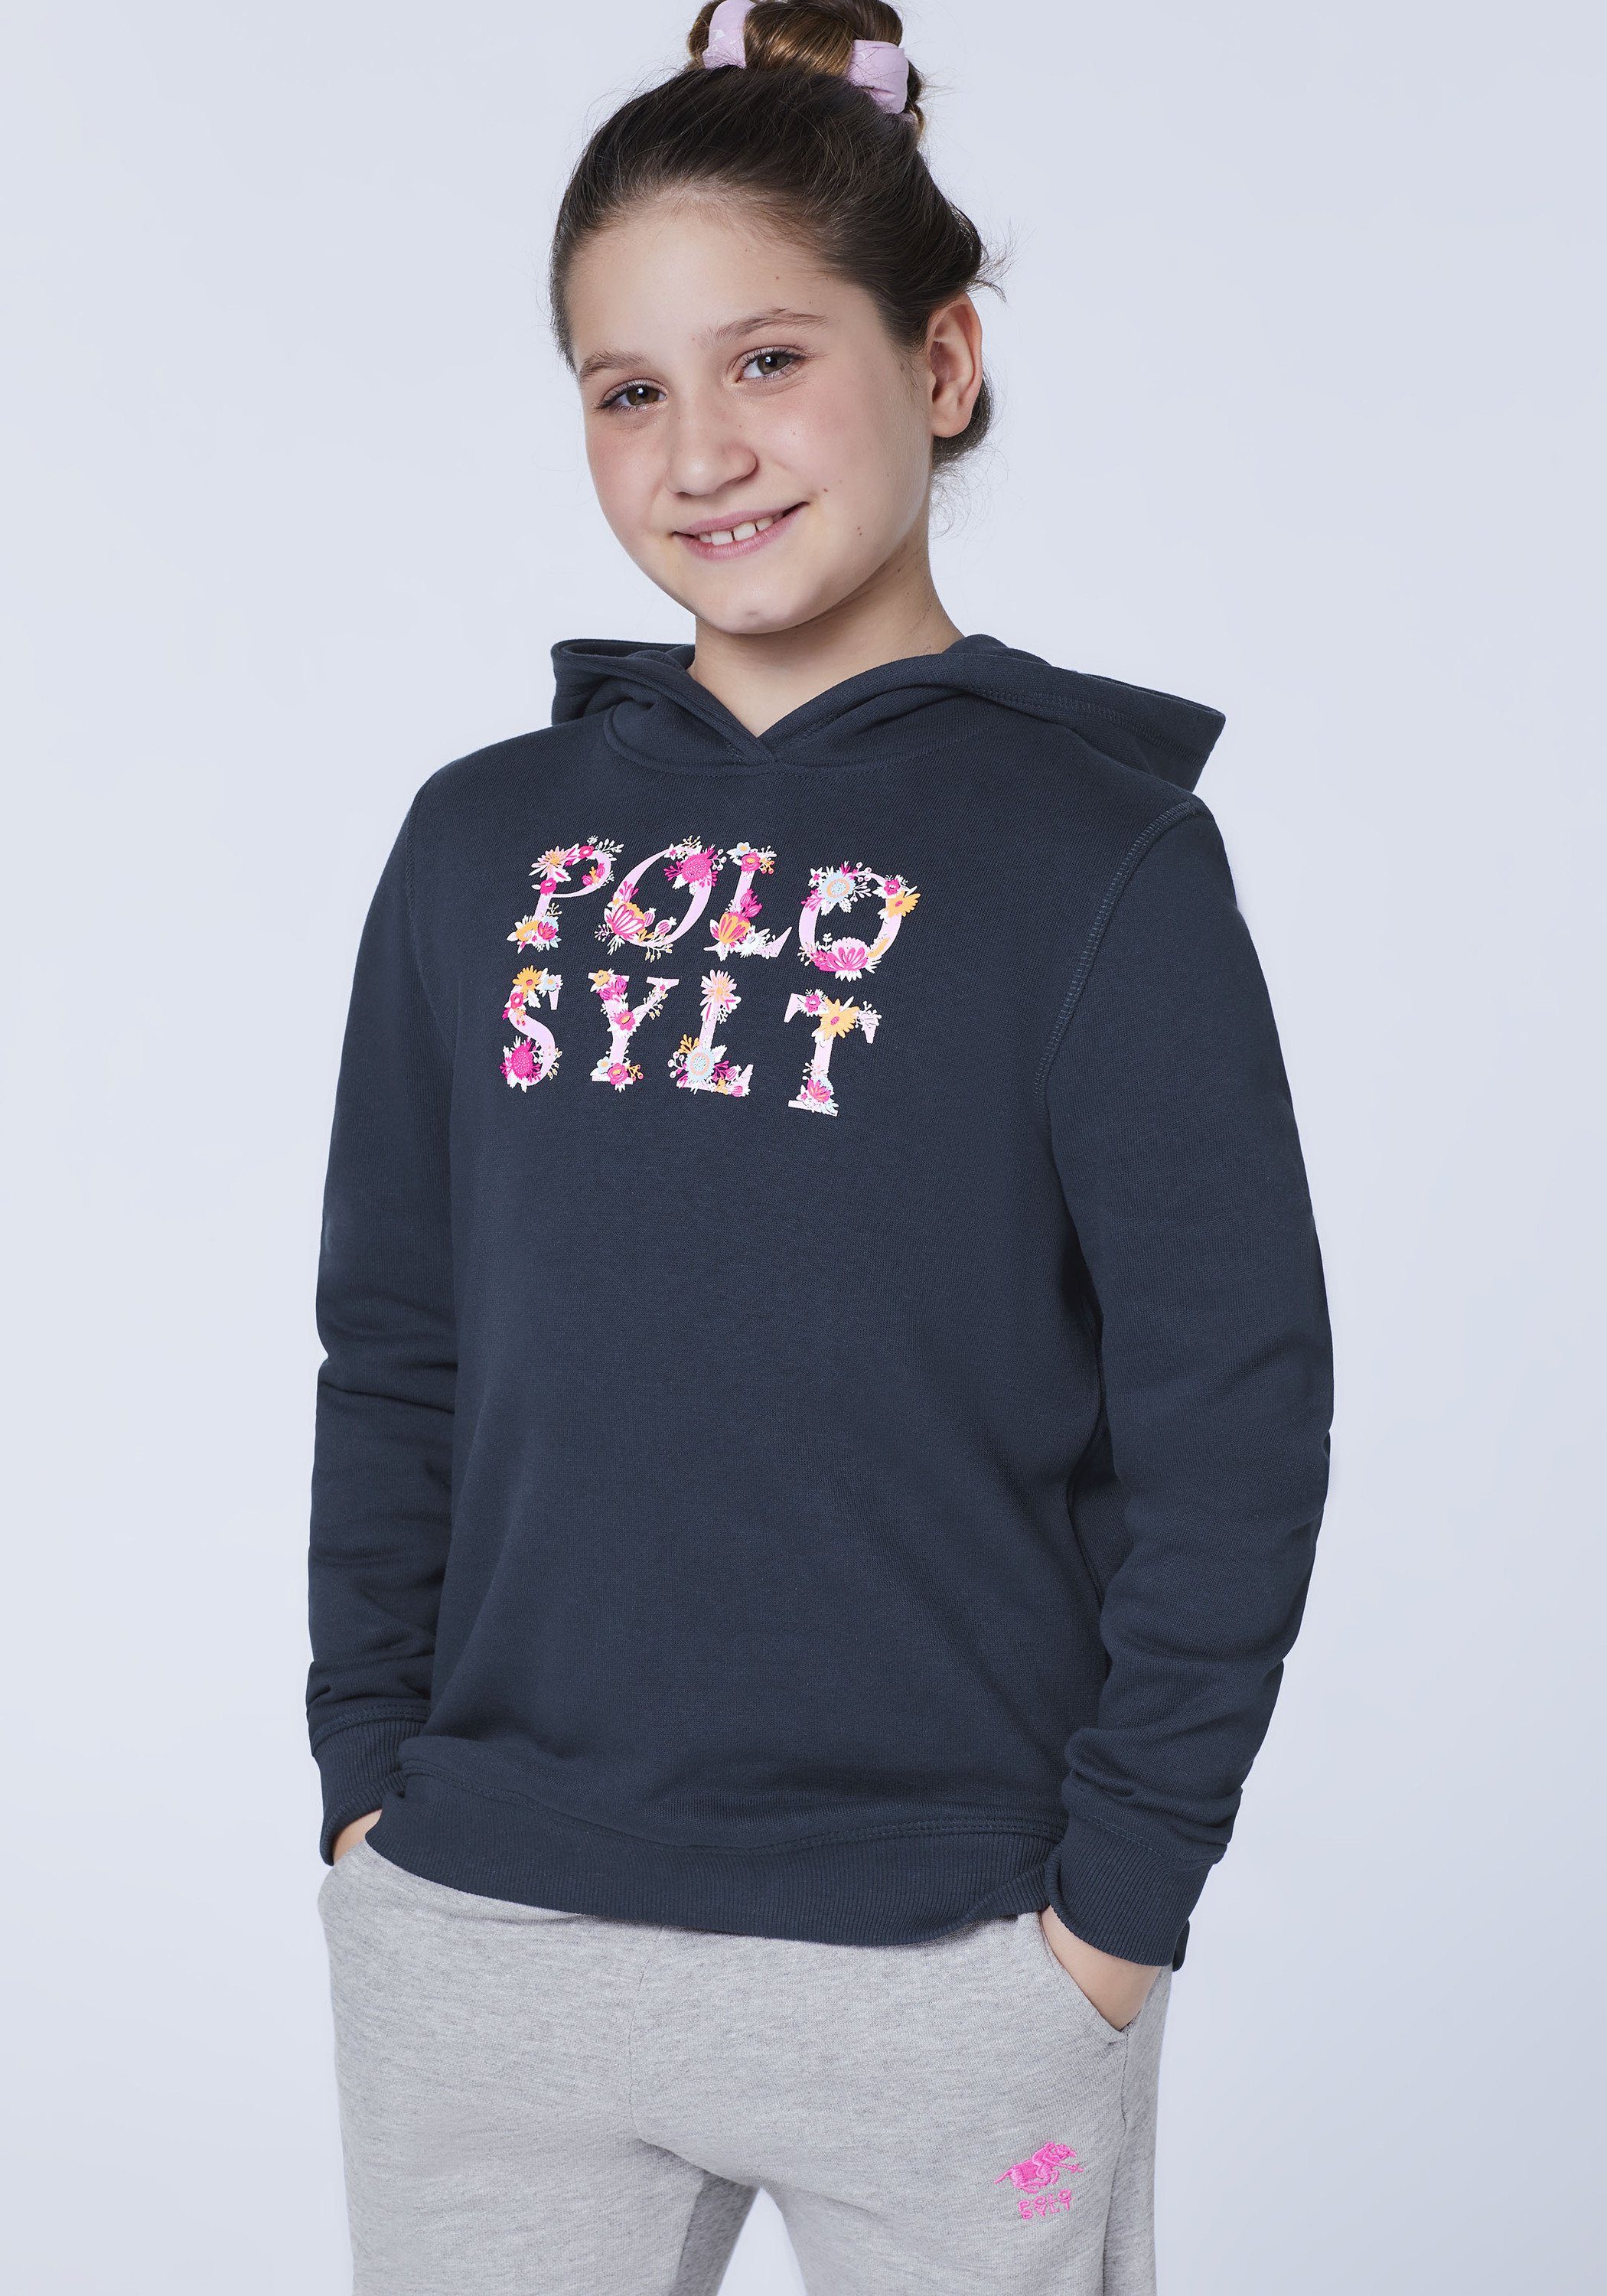 Sylt floralem Polo Total Sweatshirt Eclipse 19-4010 mit Logodesign